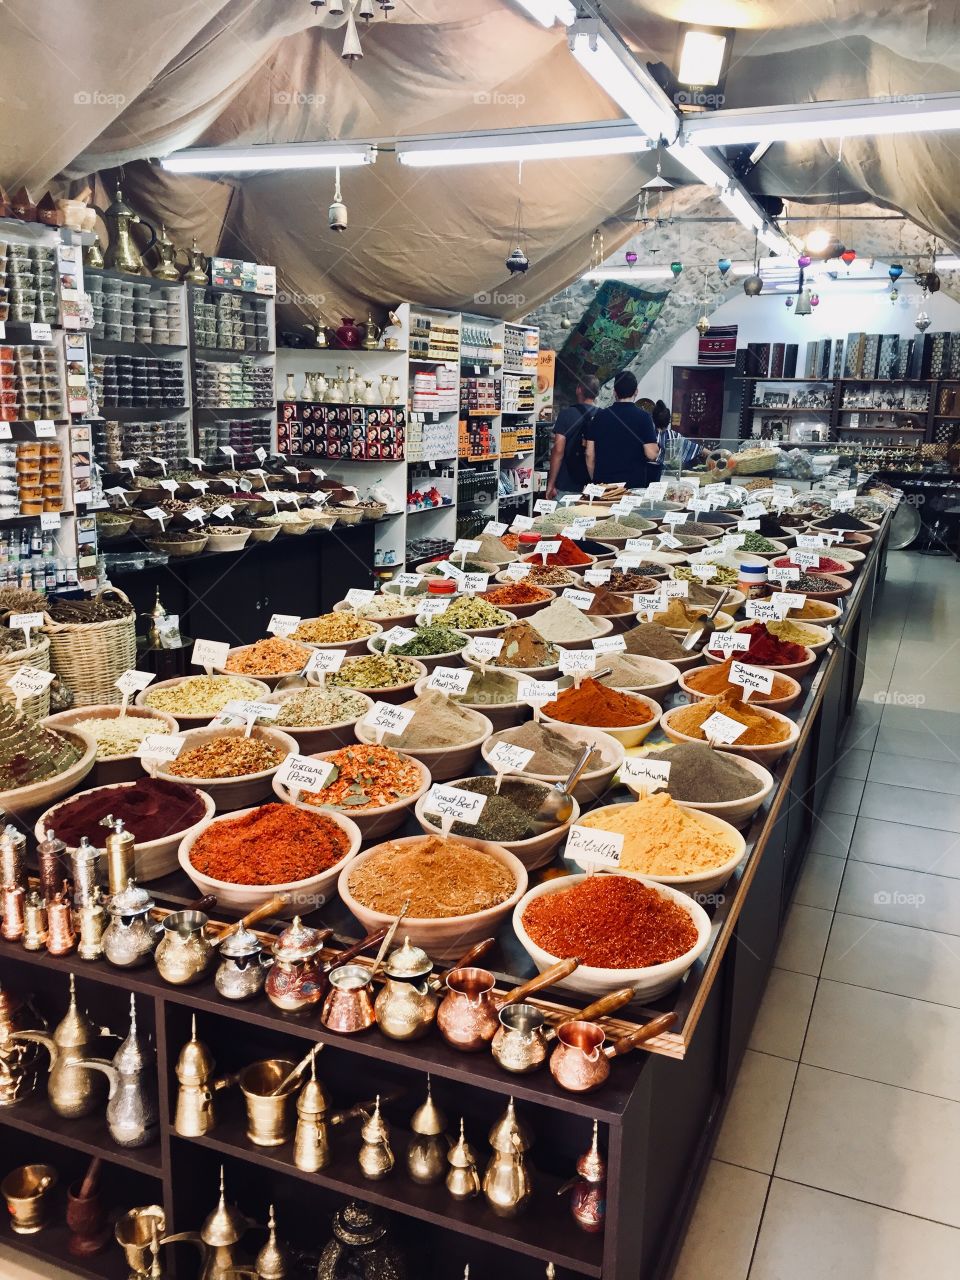 Israeli spices               Instagram: pbjorkbacka 